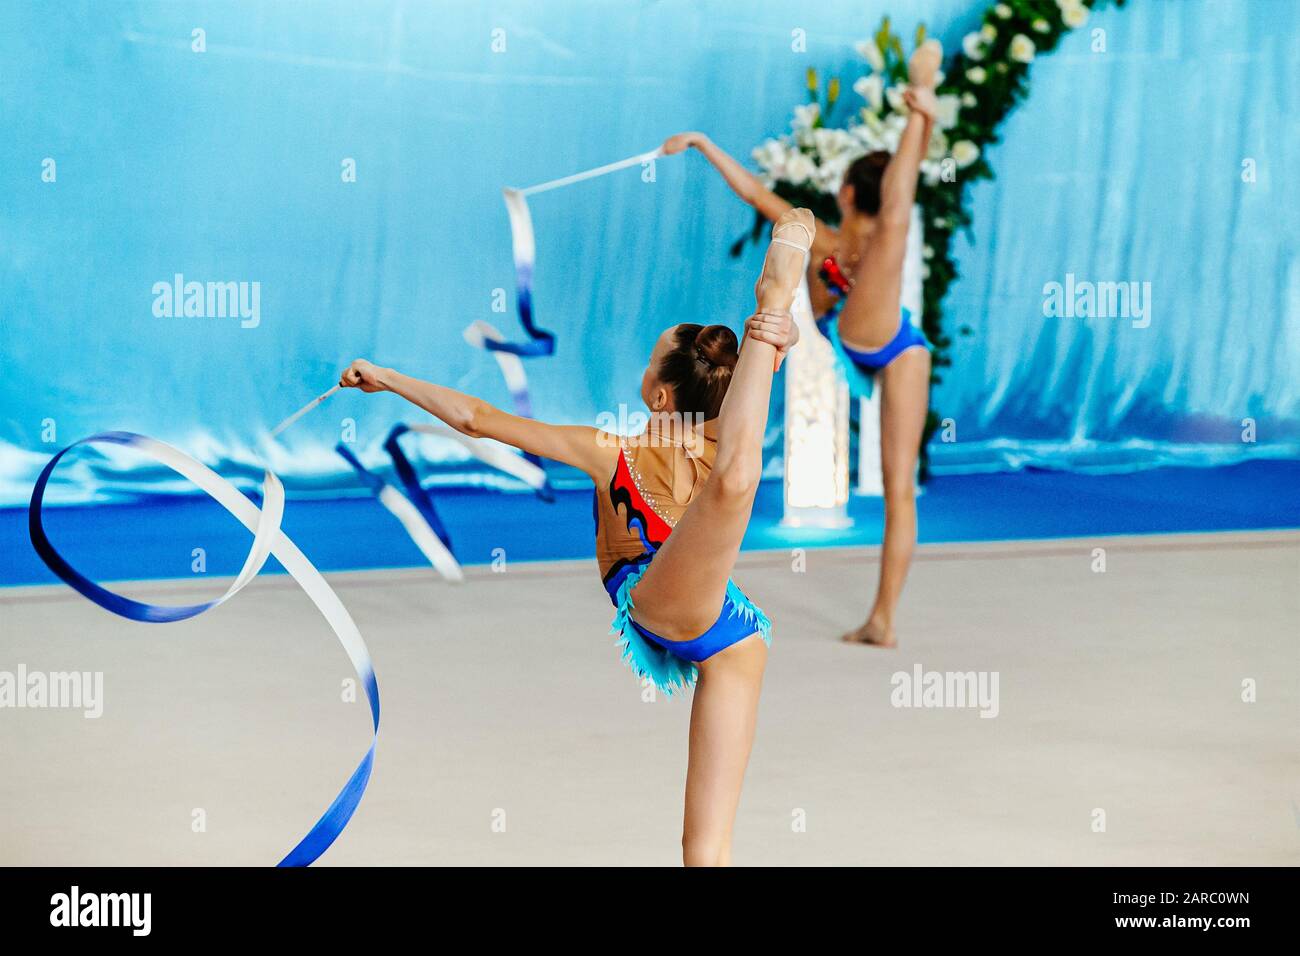 group performance girl gymnasts with ribbon in rhythmic gymnastics Stock Photo